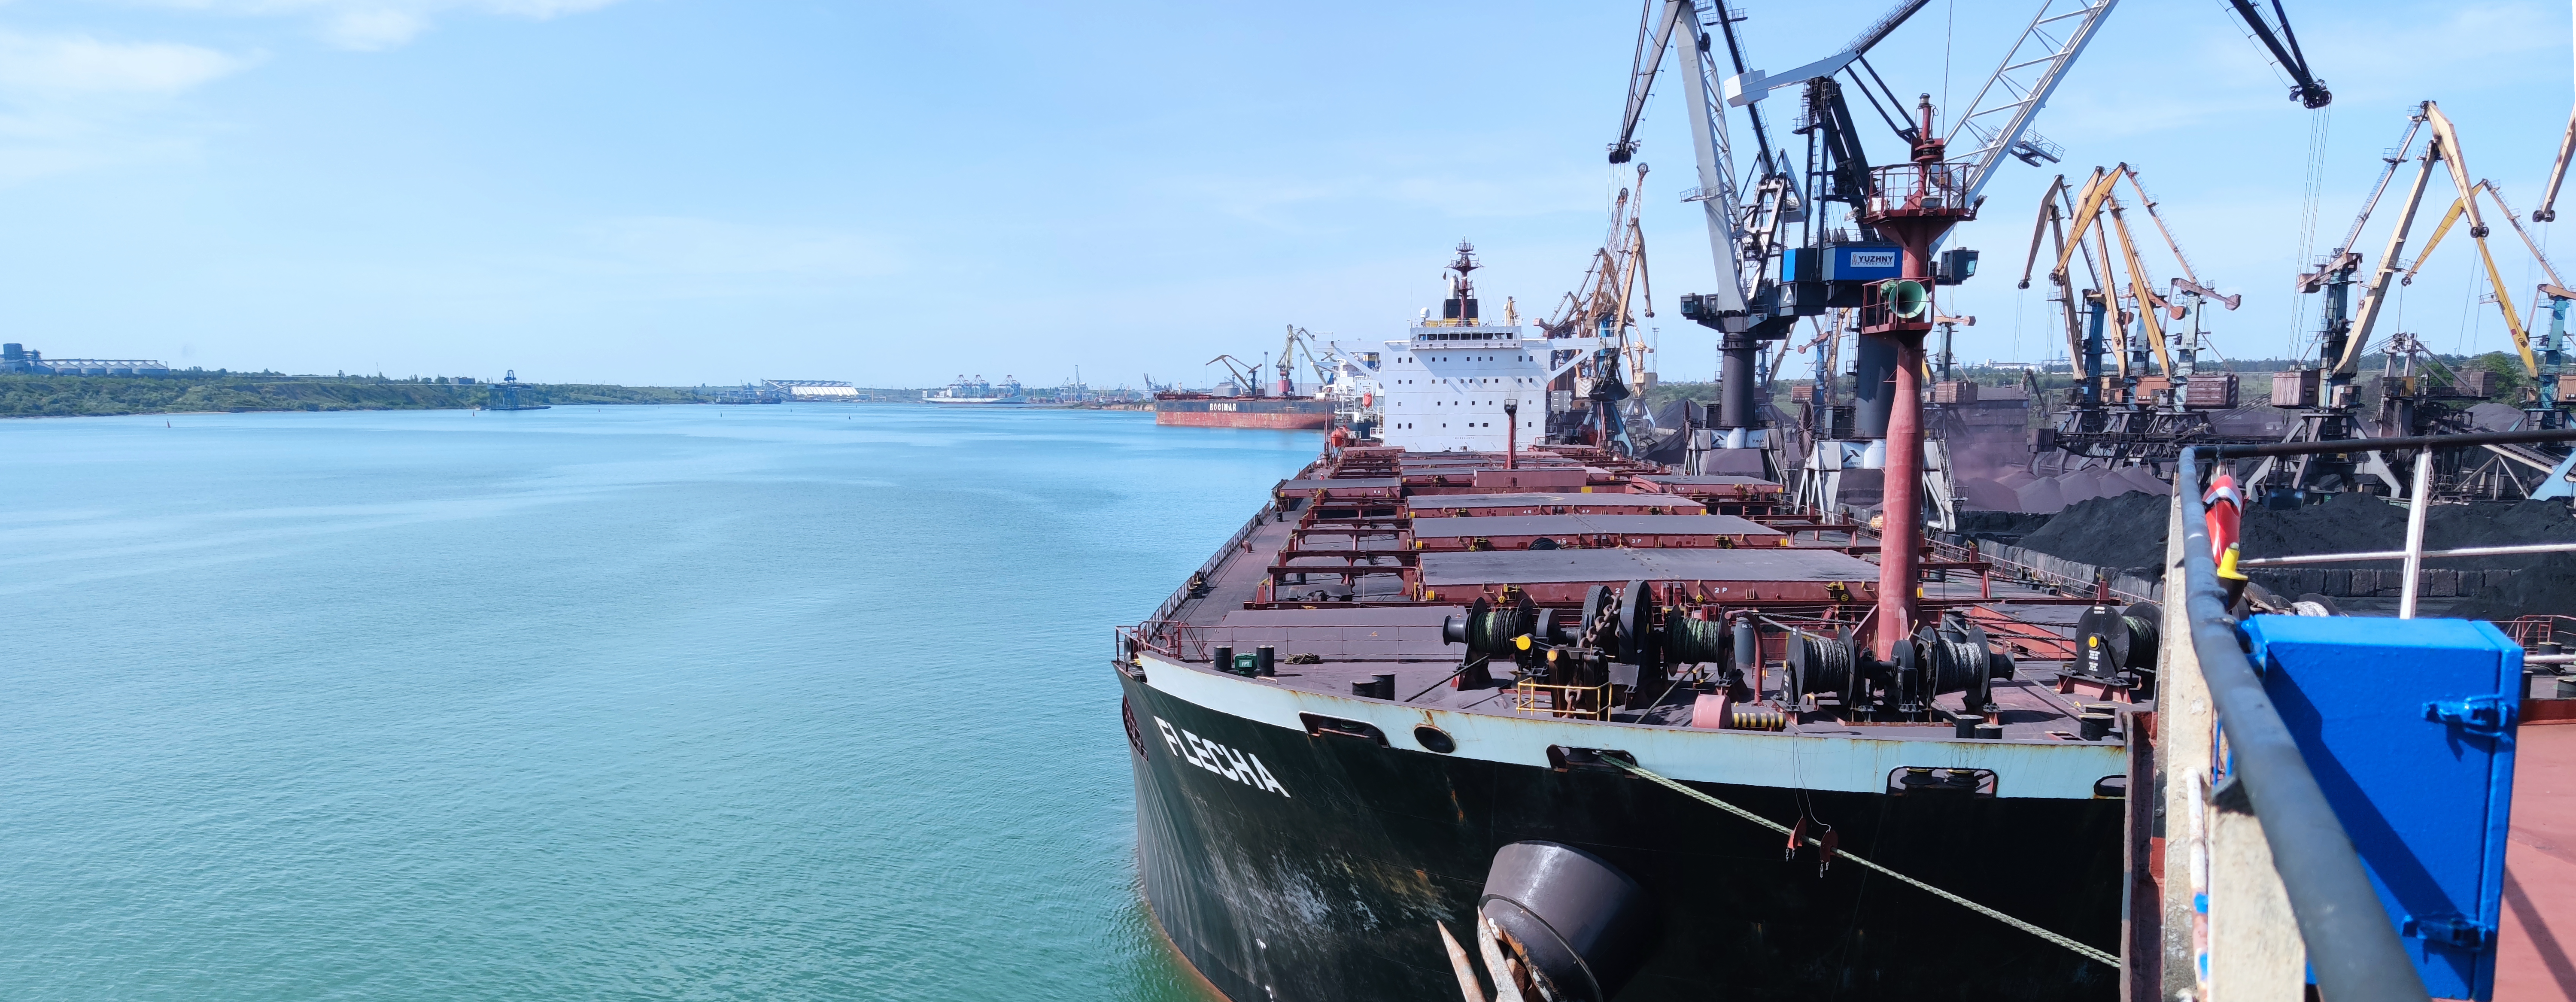 Supply, maintenance and modernization of ships